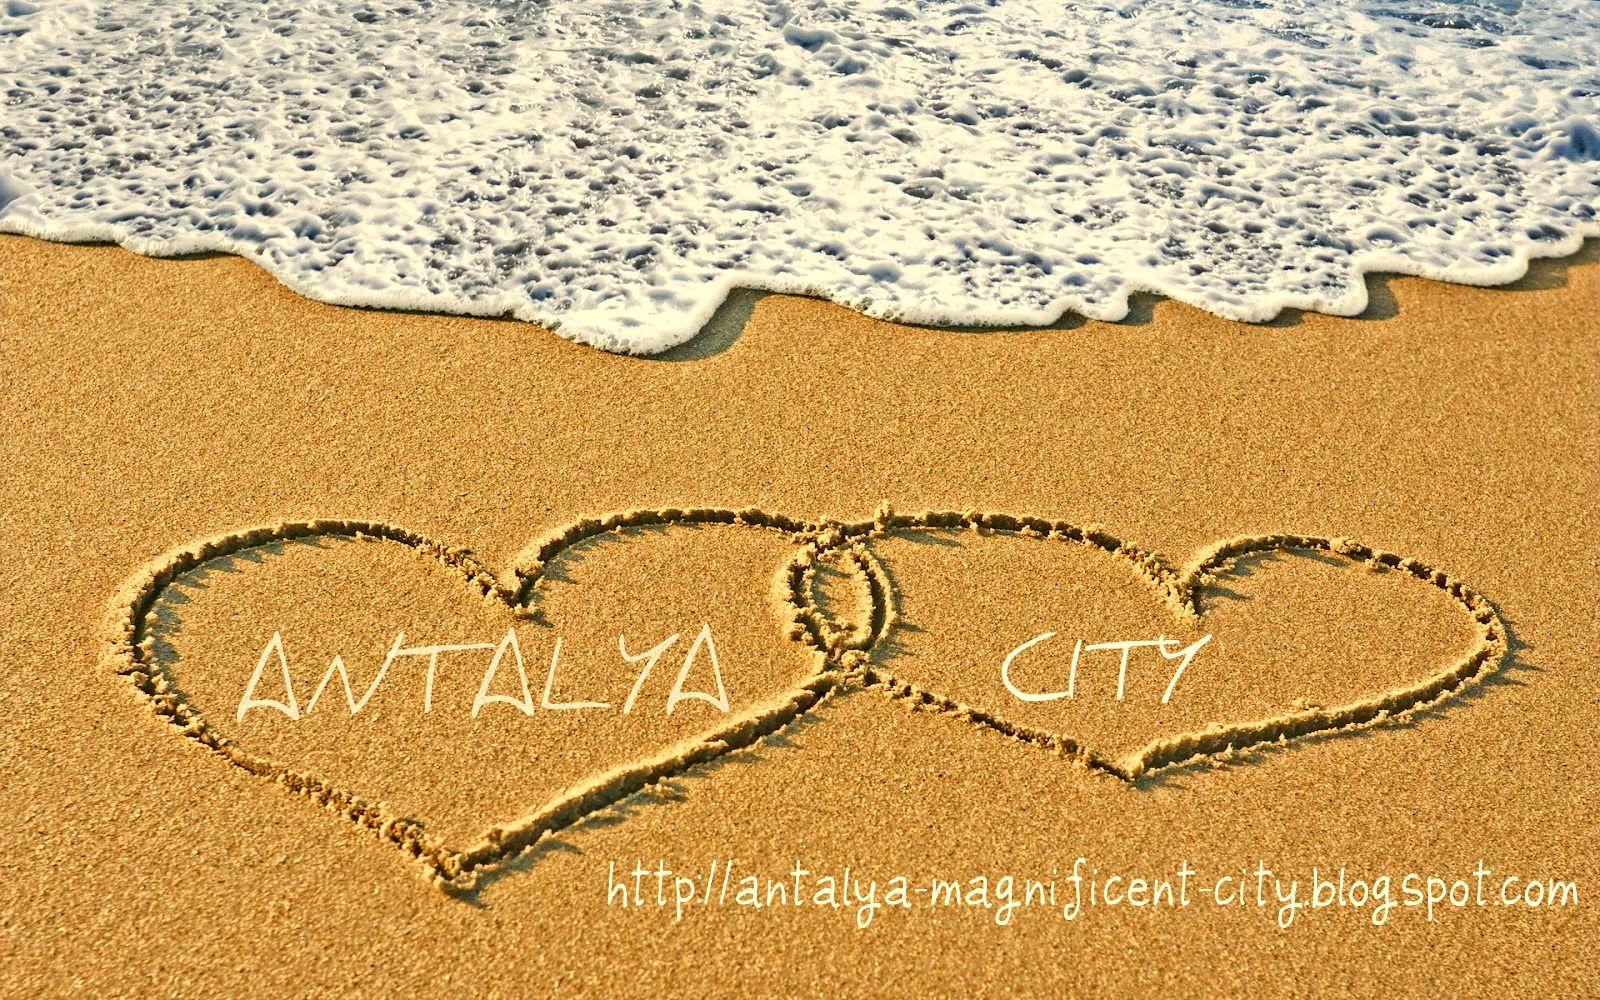 Antalya Wallpaper ANTALYA CITY BLOG